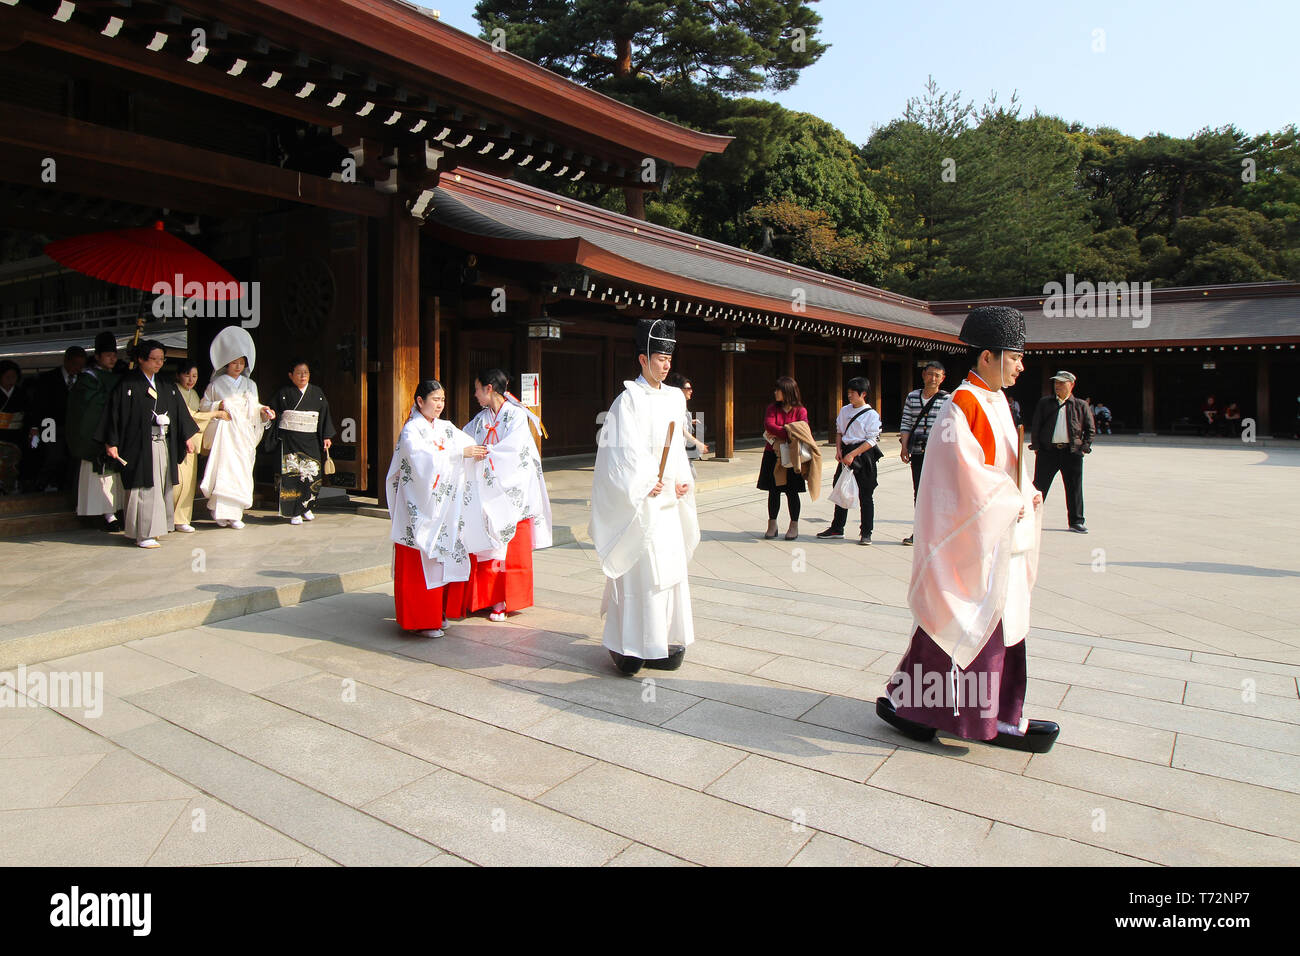 Tokyo, Japan - April 7, 2019: Procession ceremony of traditional Japanese wedding at Meiji, Shrine or Meiji Jingu, in Tokyo, Japan Stock Photo